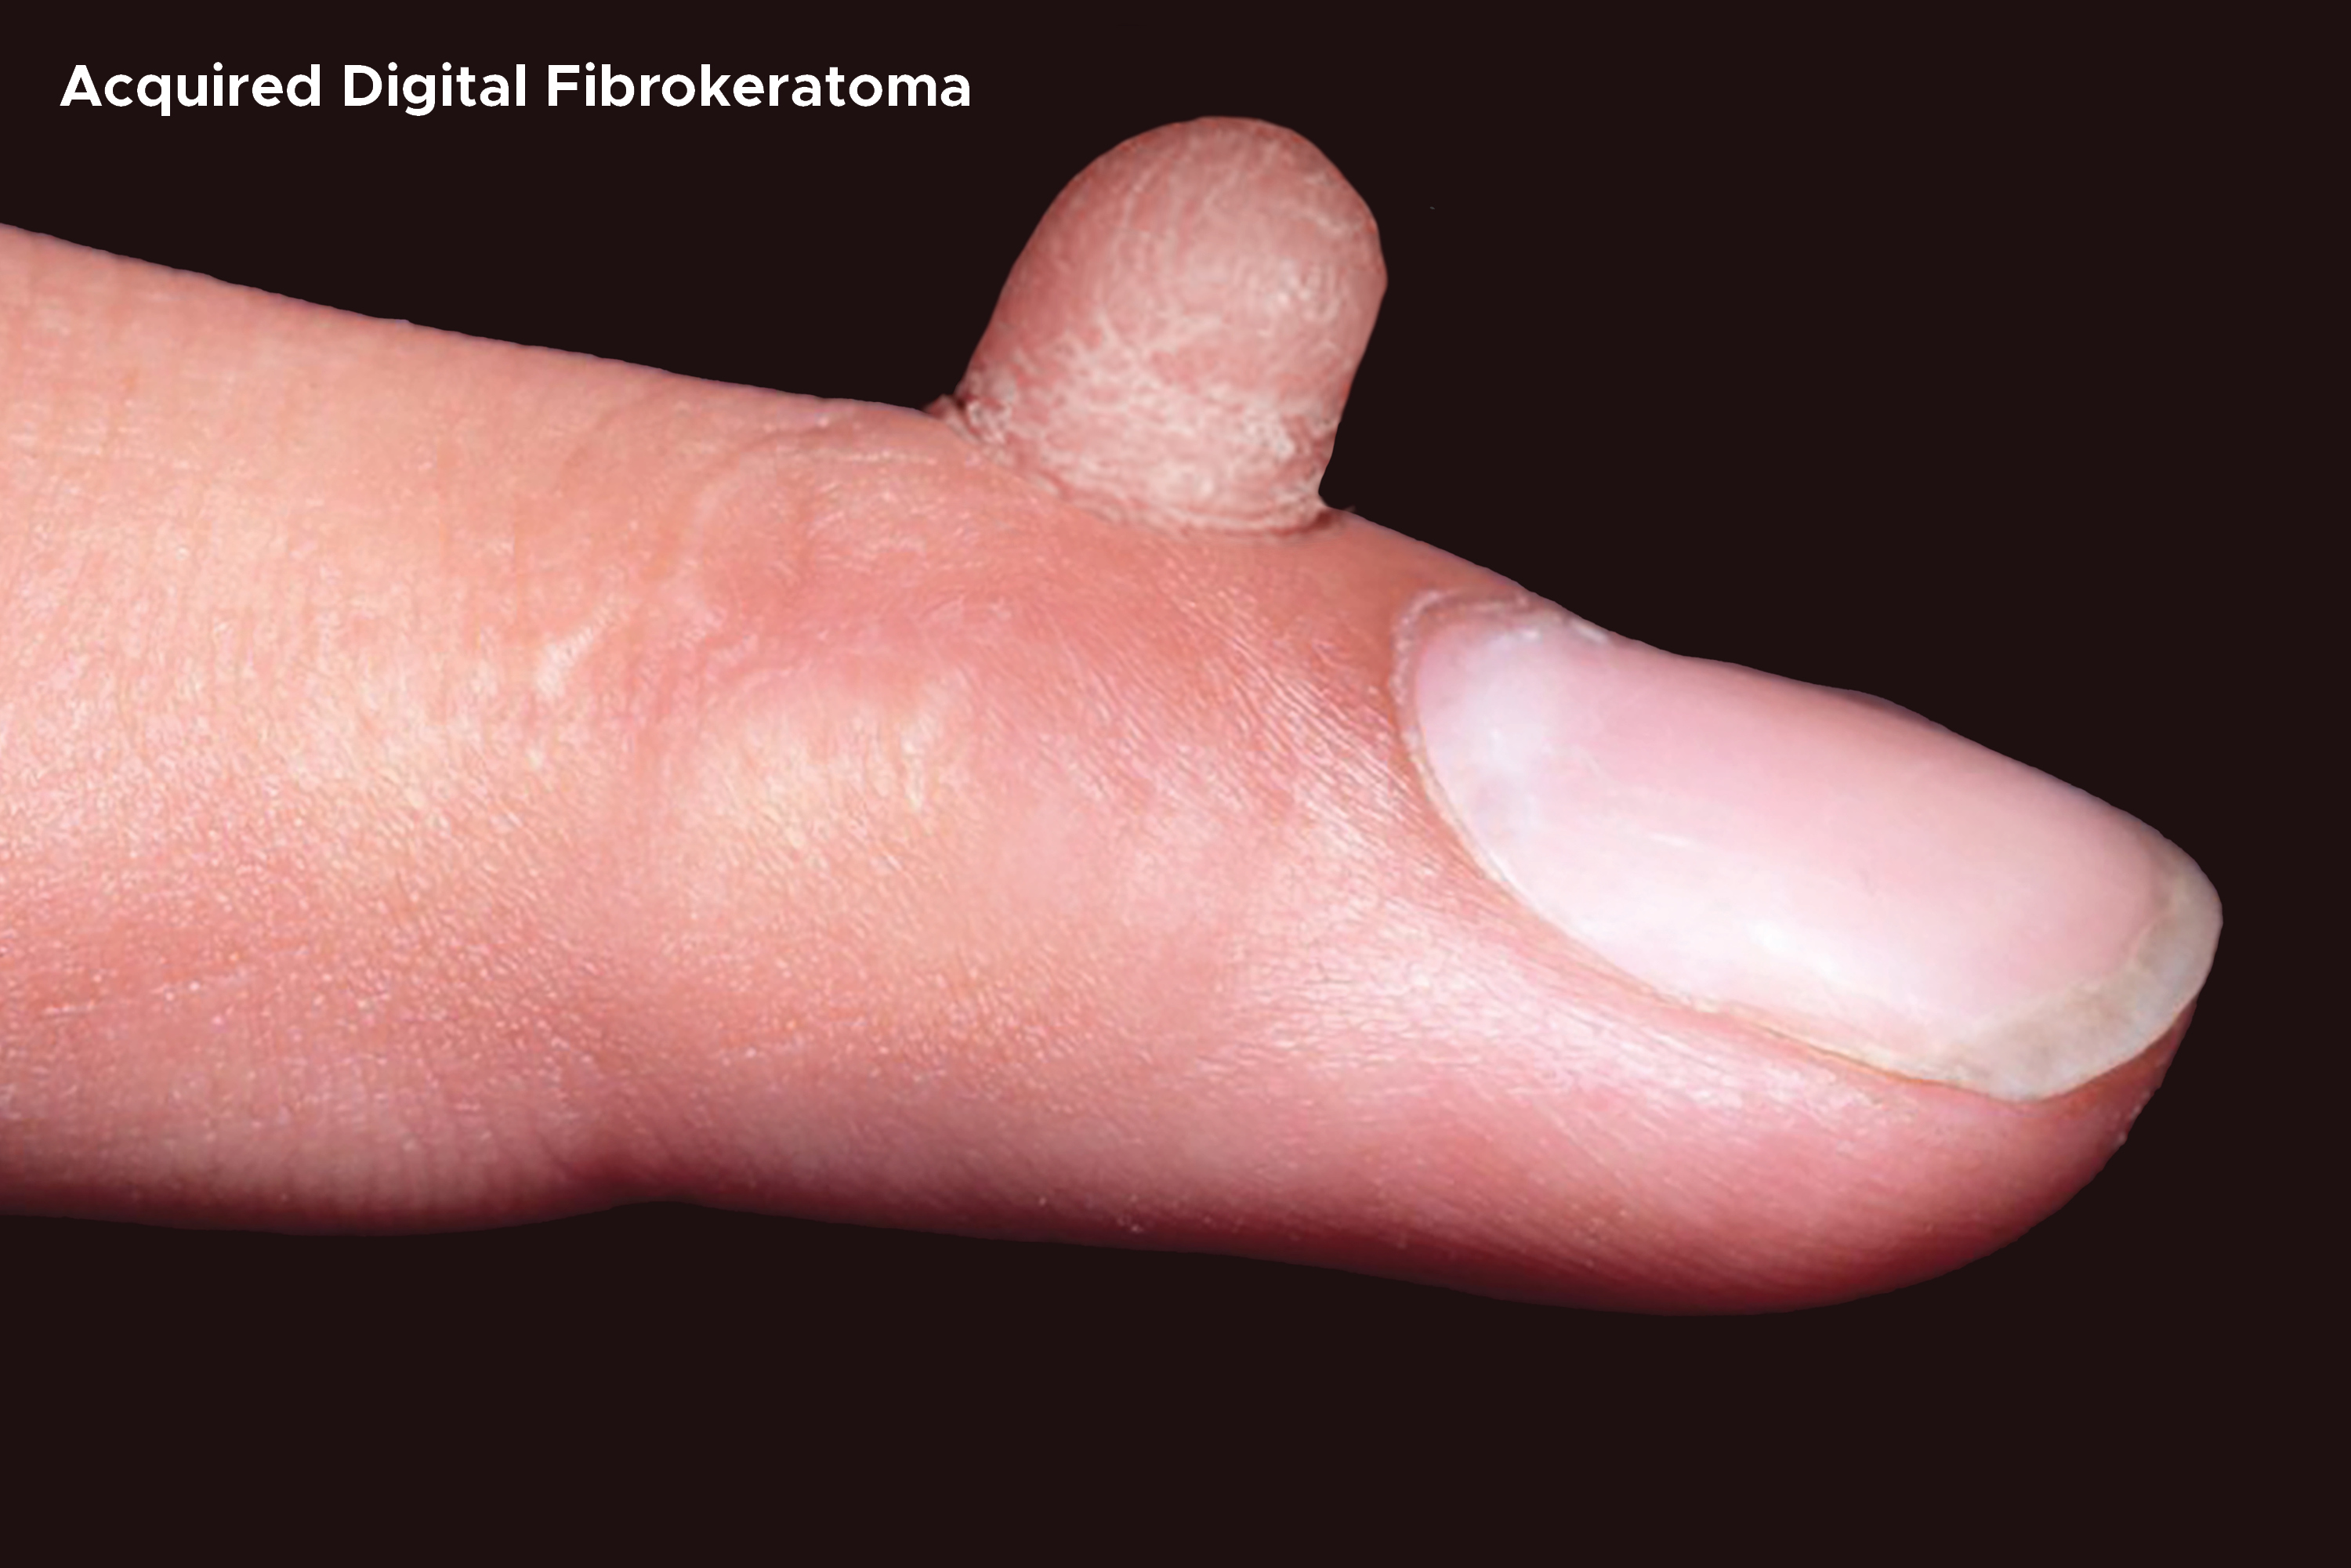 Acquired Digital Fibrokeratoma on index finger.